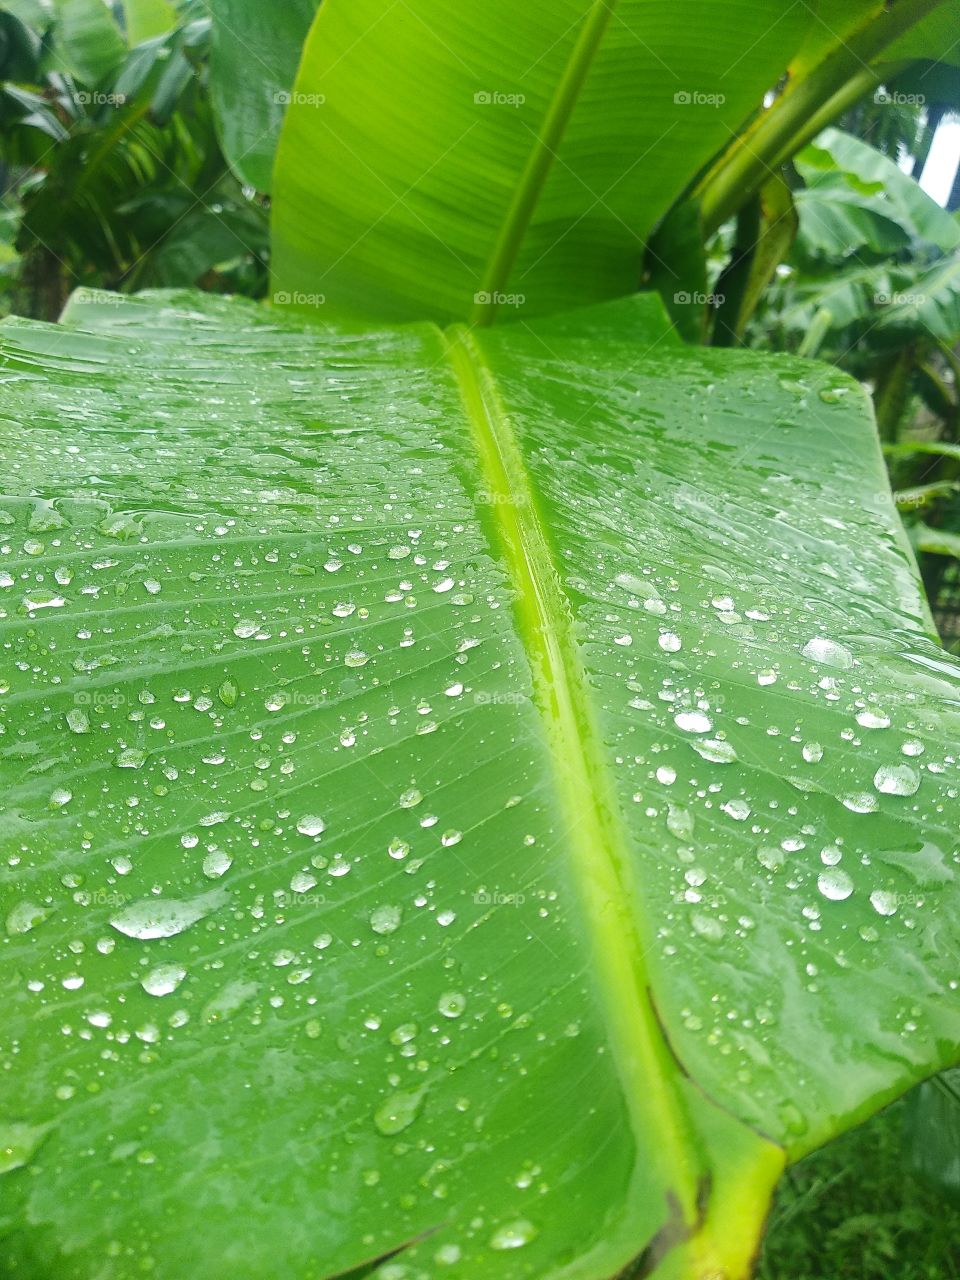 beautiful rain drop in the banana leaf in nature in the garden.